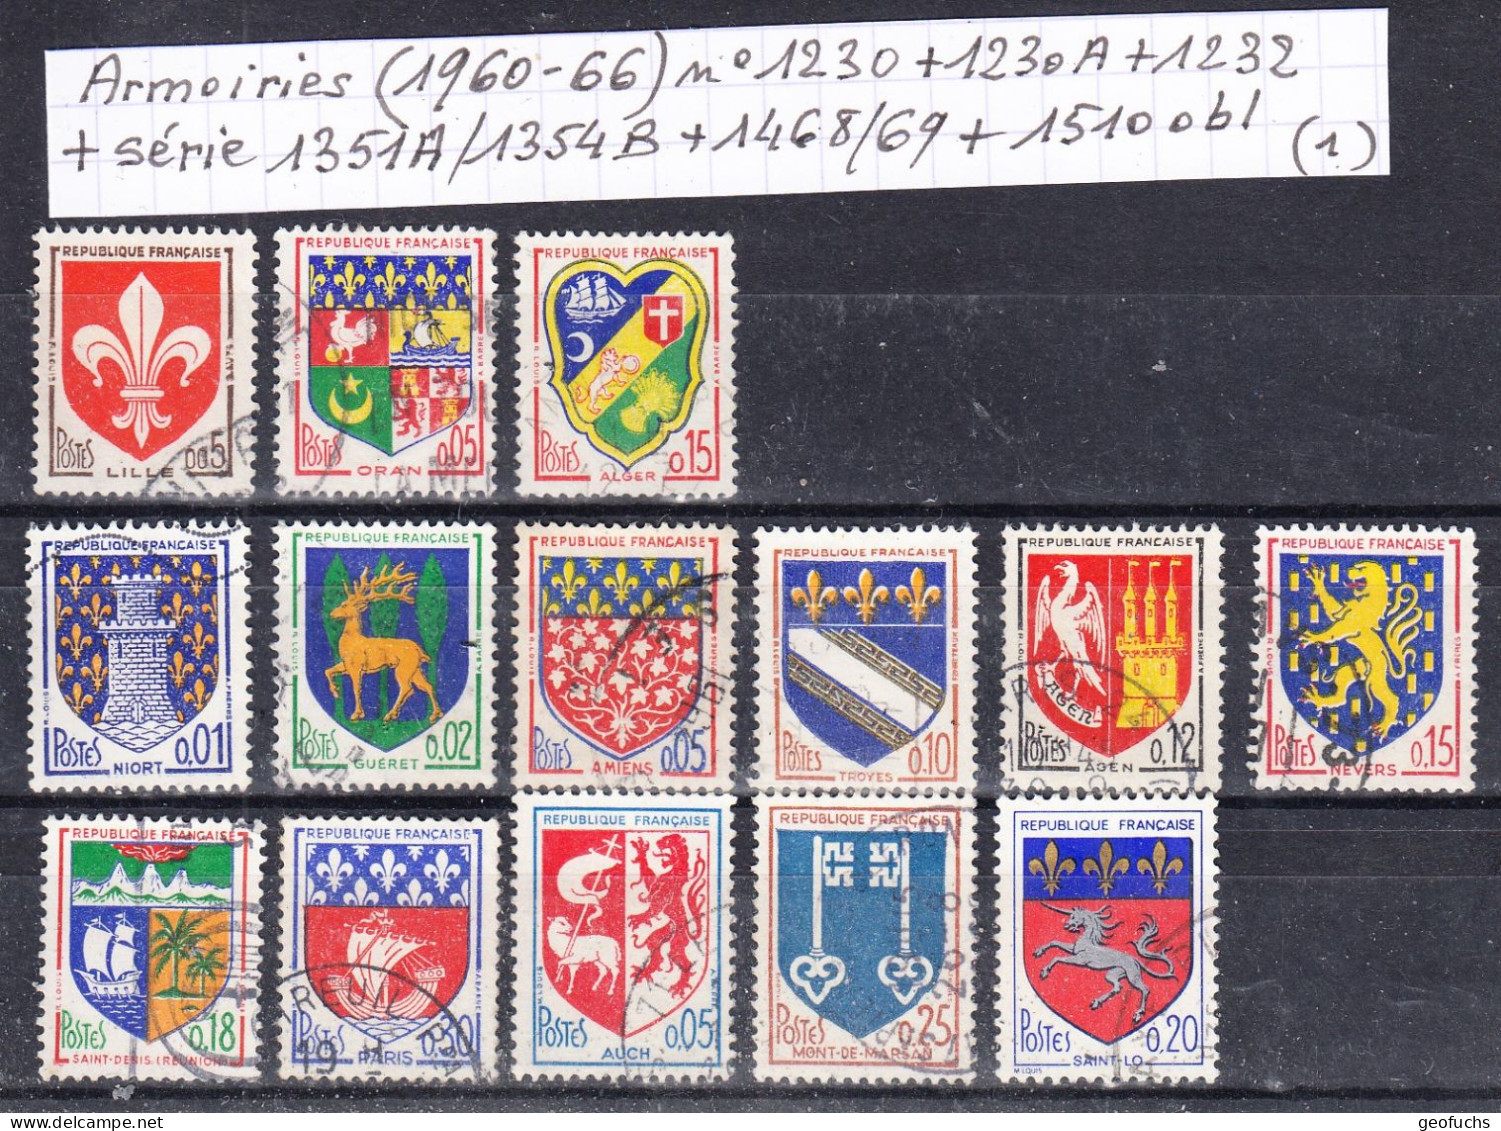 France Armoiries (1960-66) Y/T N° 1230/30A + 1232 + Série 1351A/1354B + 1468/69 + 1510 Oblitérés (lot 1) - 1941-66 Escudos Y Blasones